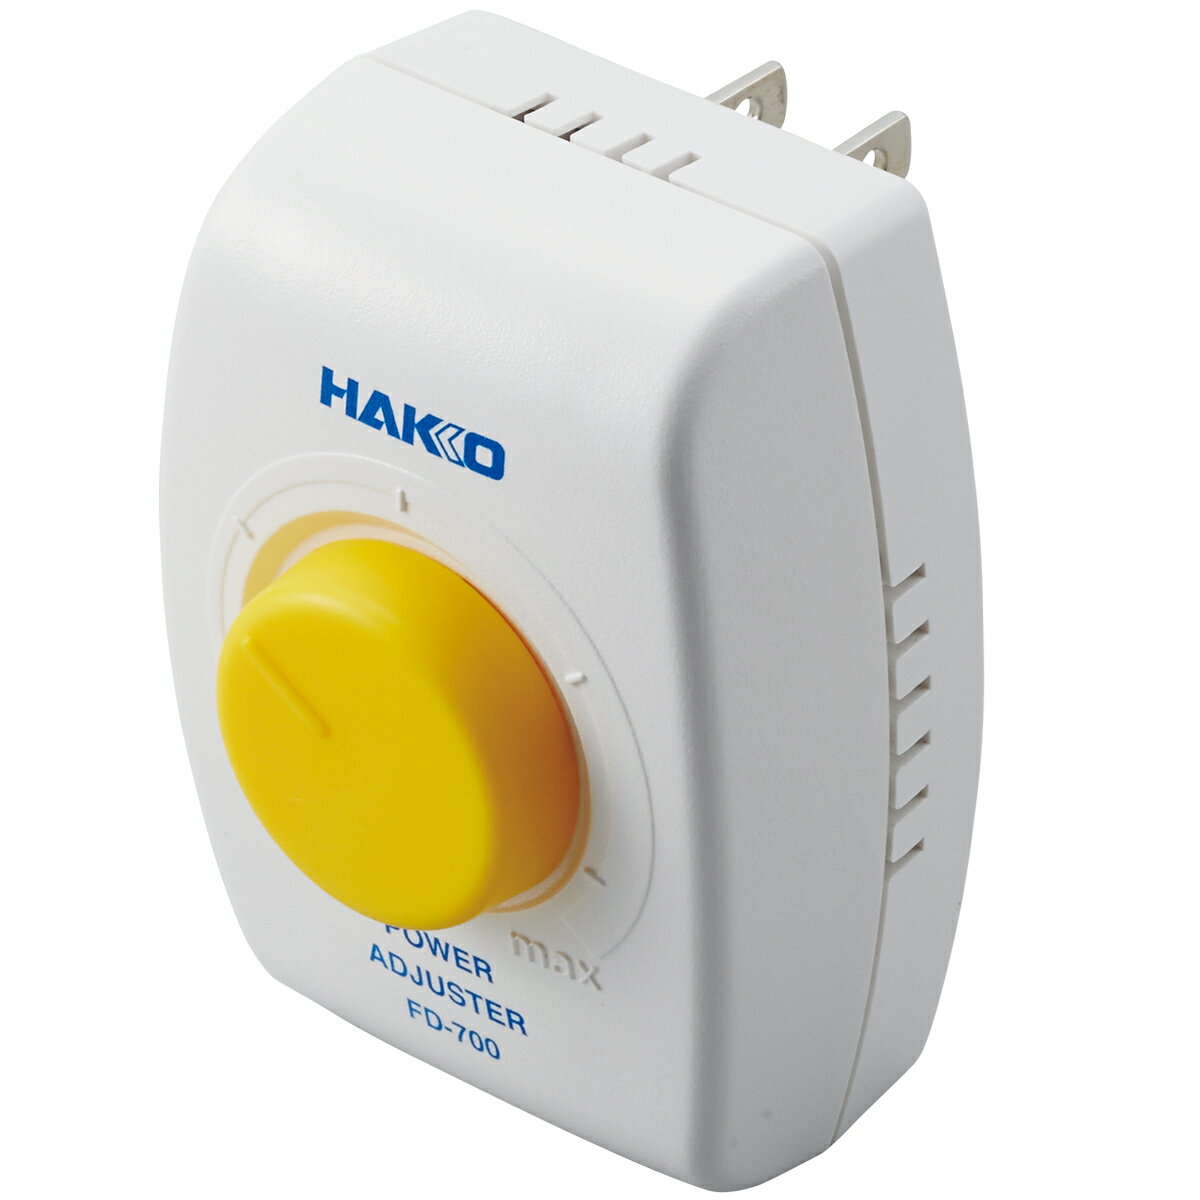 HAKKO パワーアジャスター FD700-81 温度調節器 白光